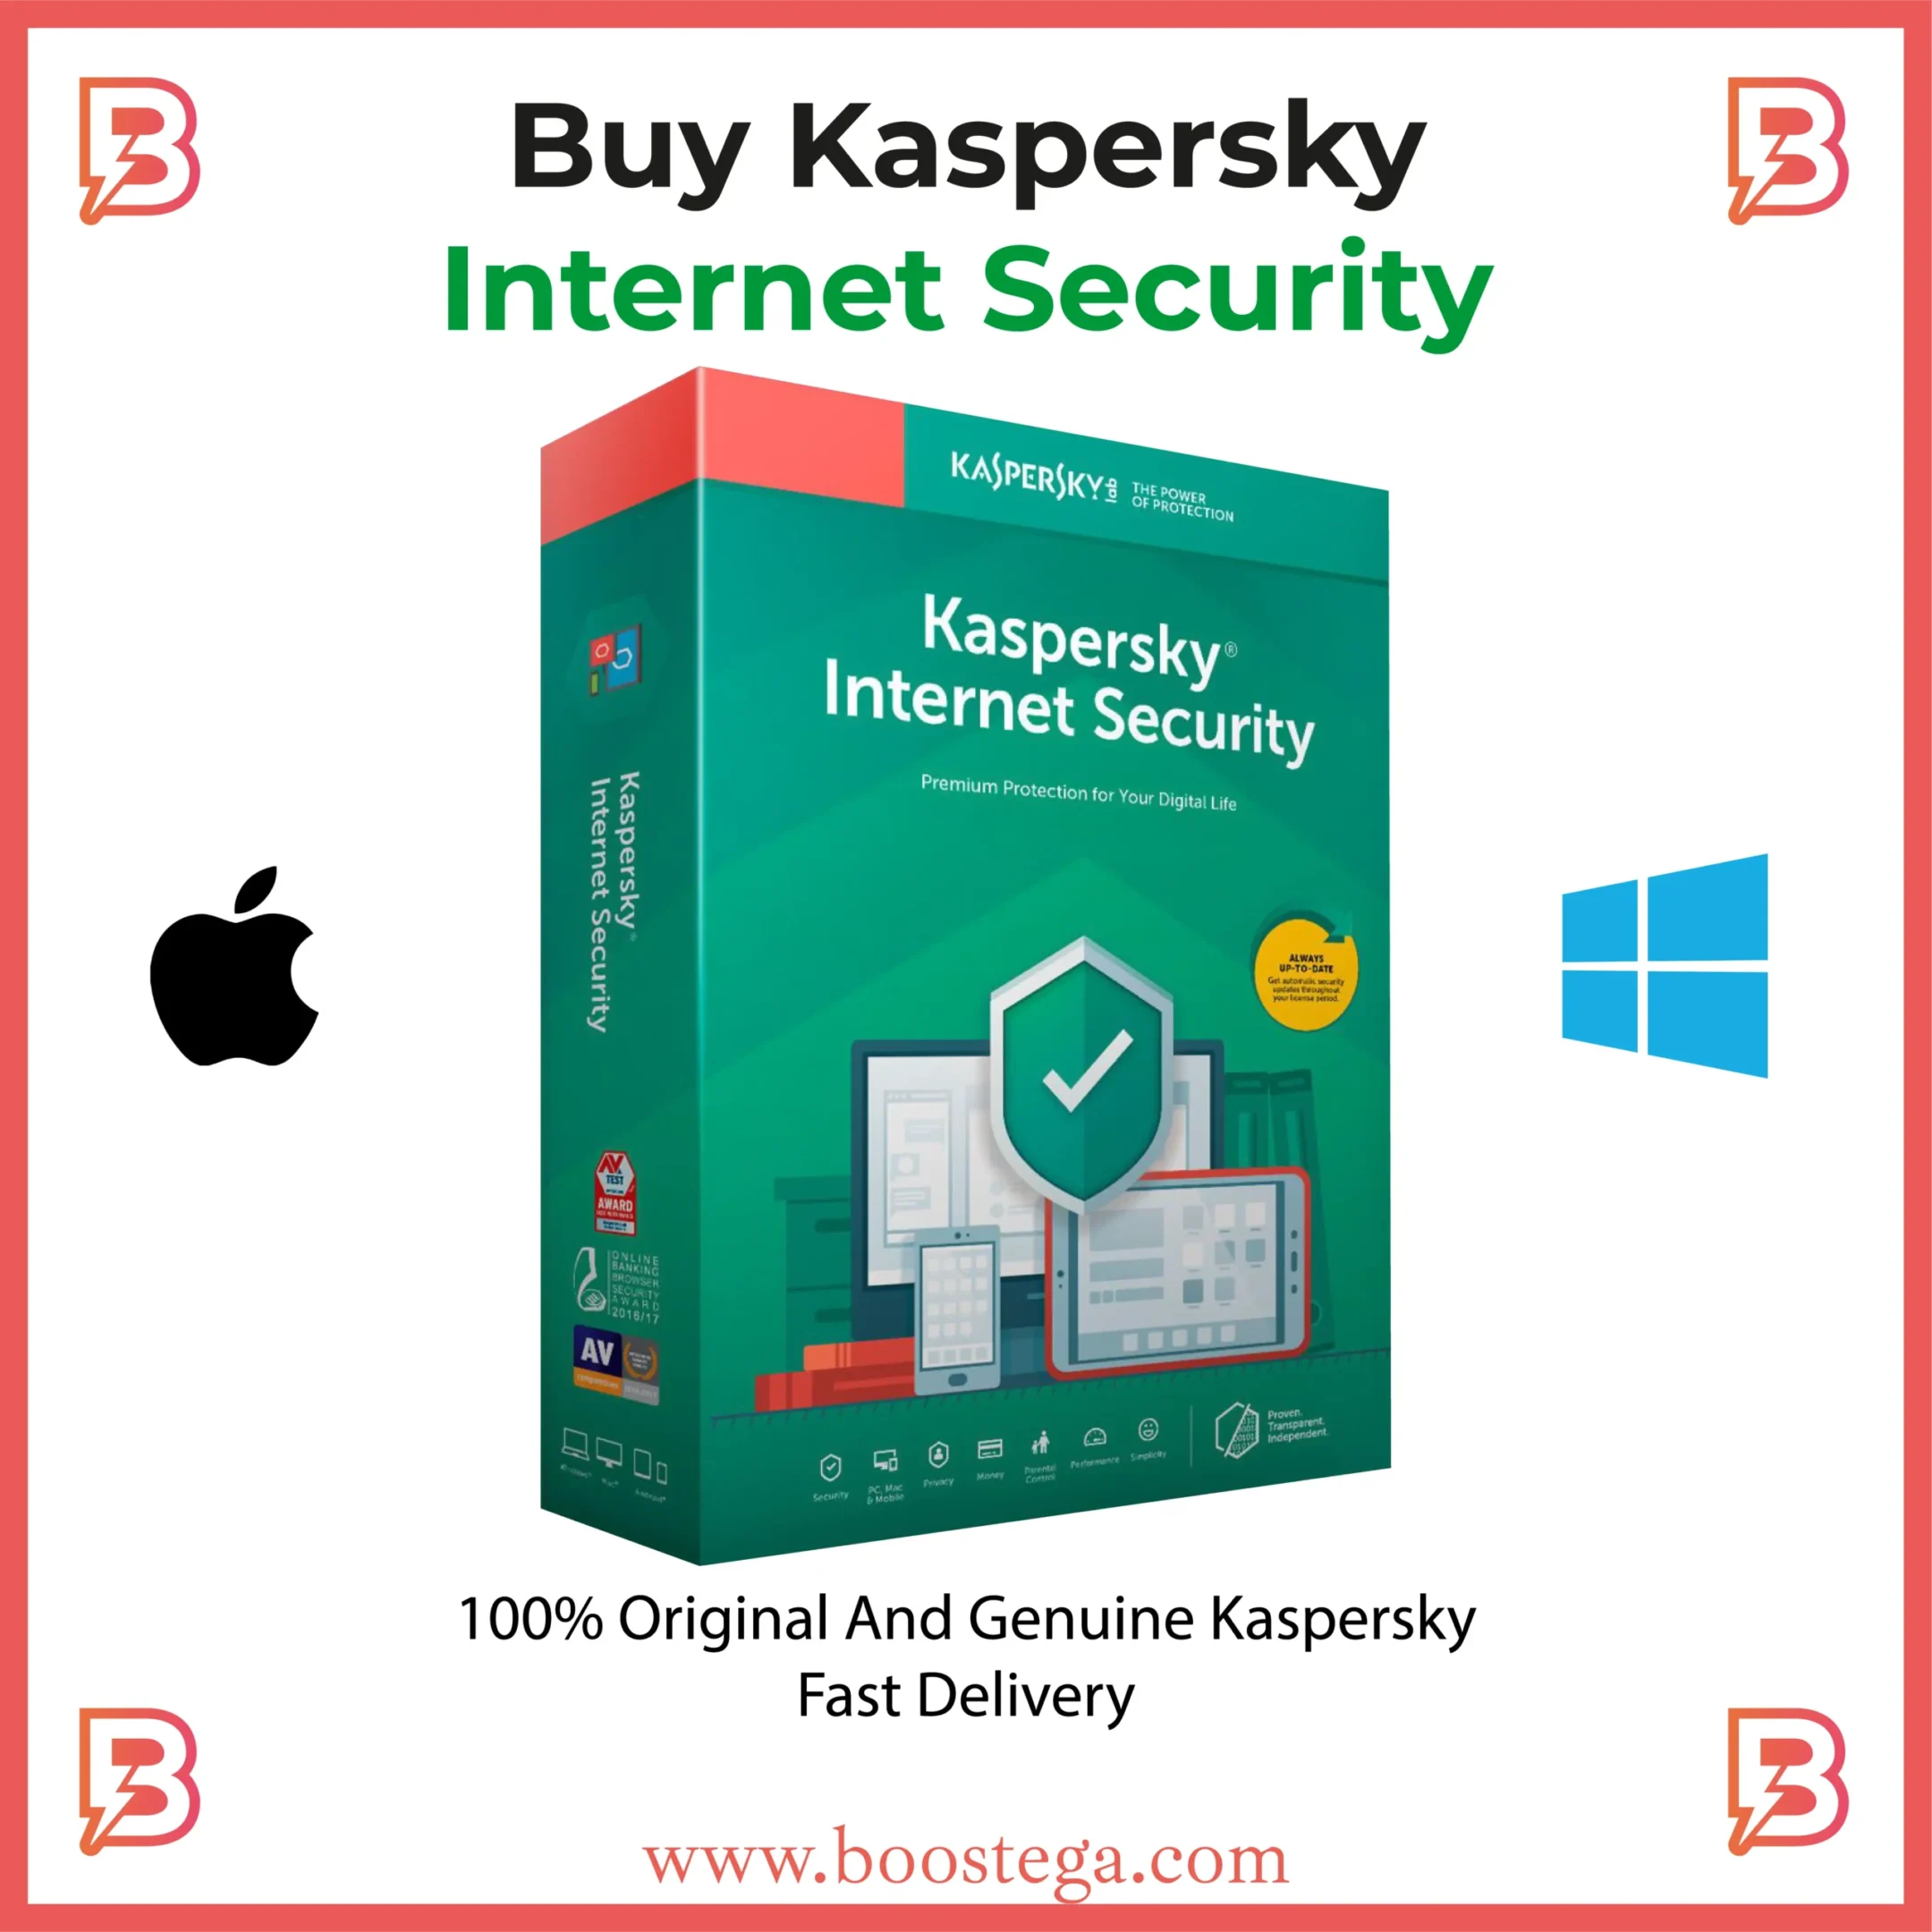 buy kaspersky internet security by boostega